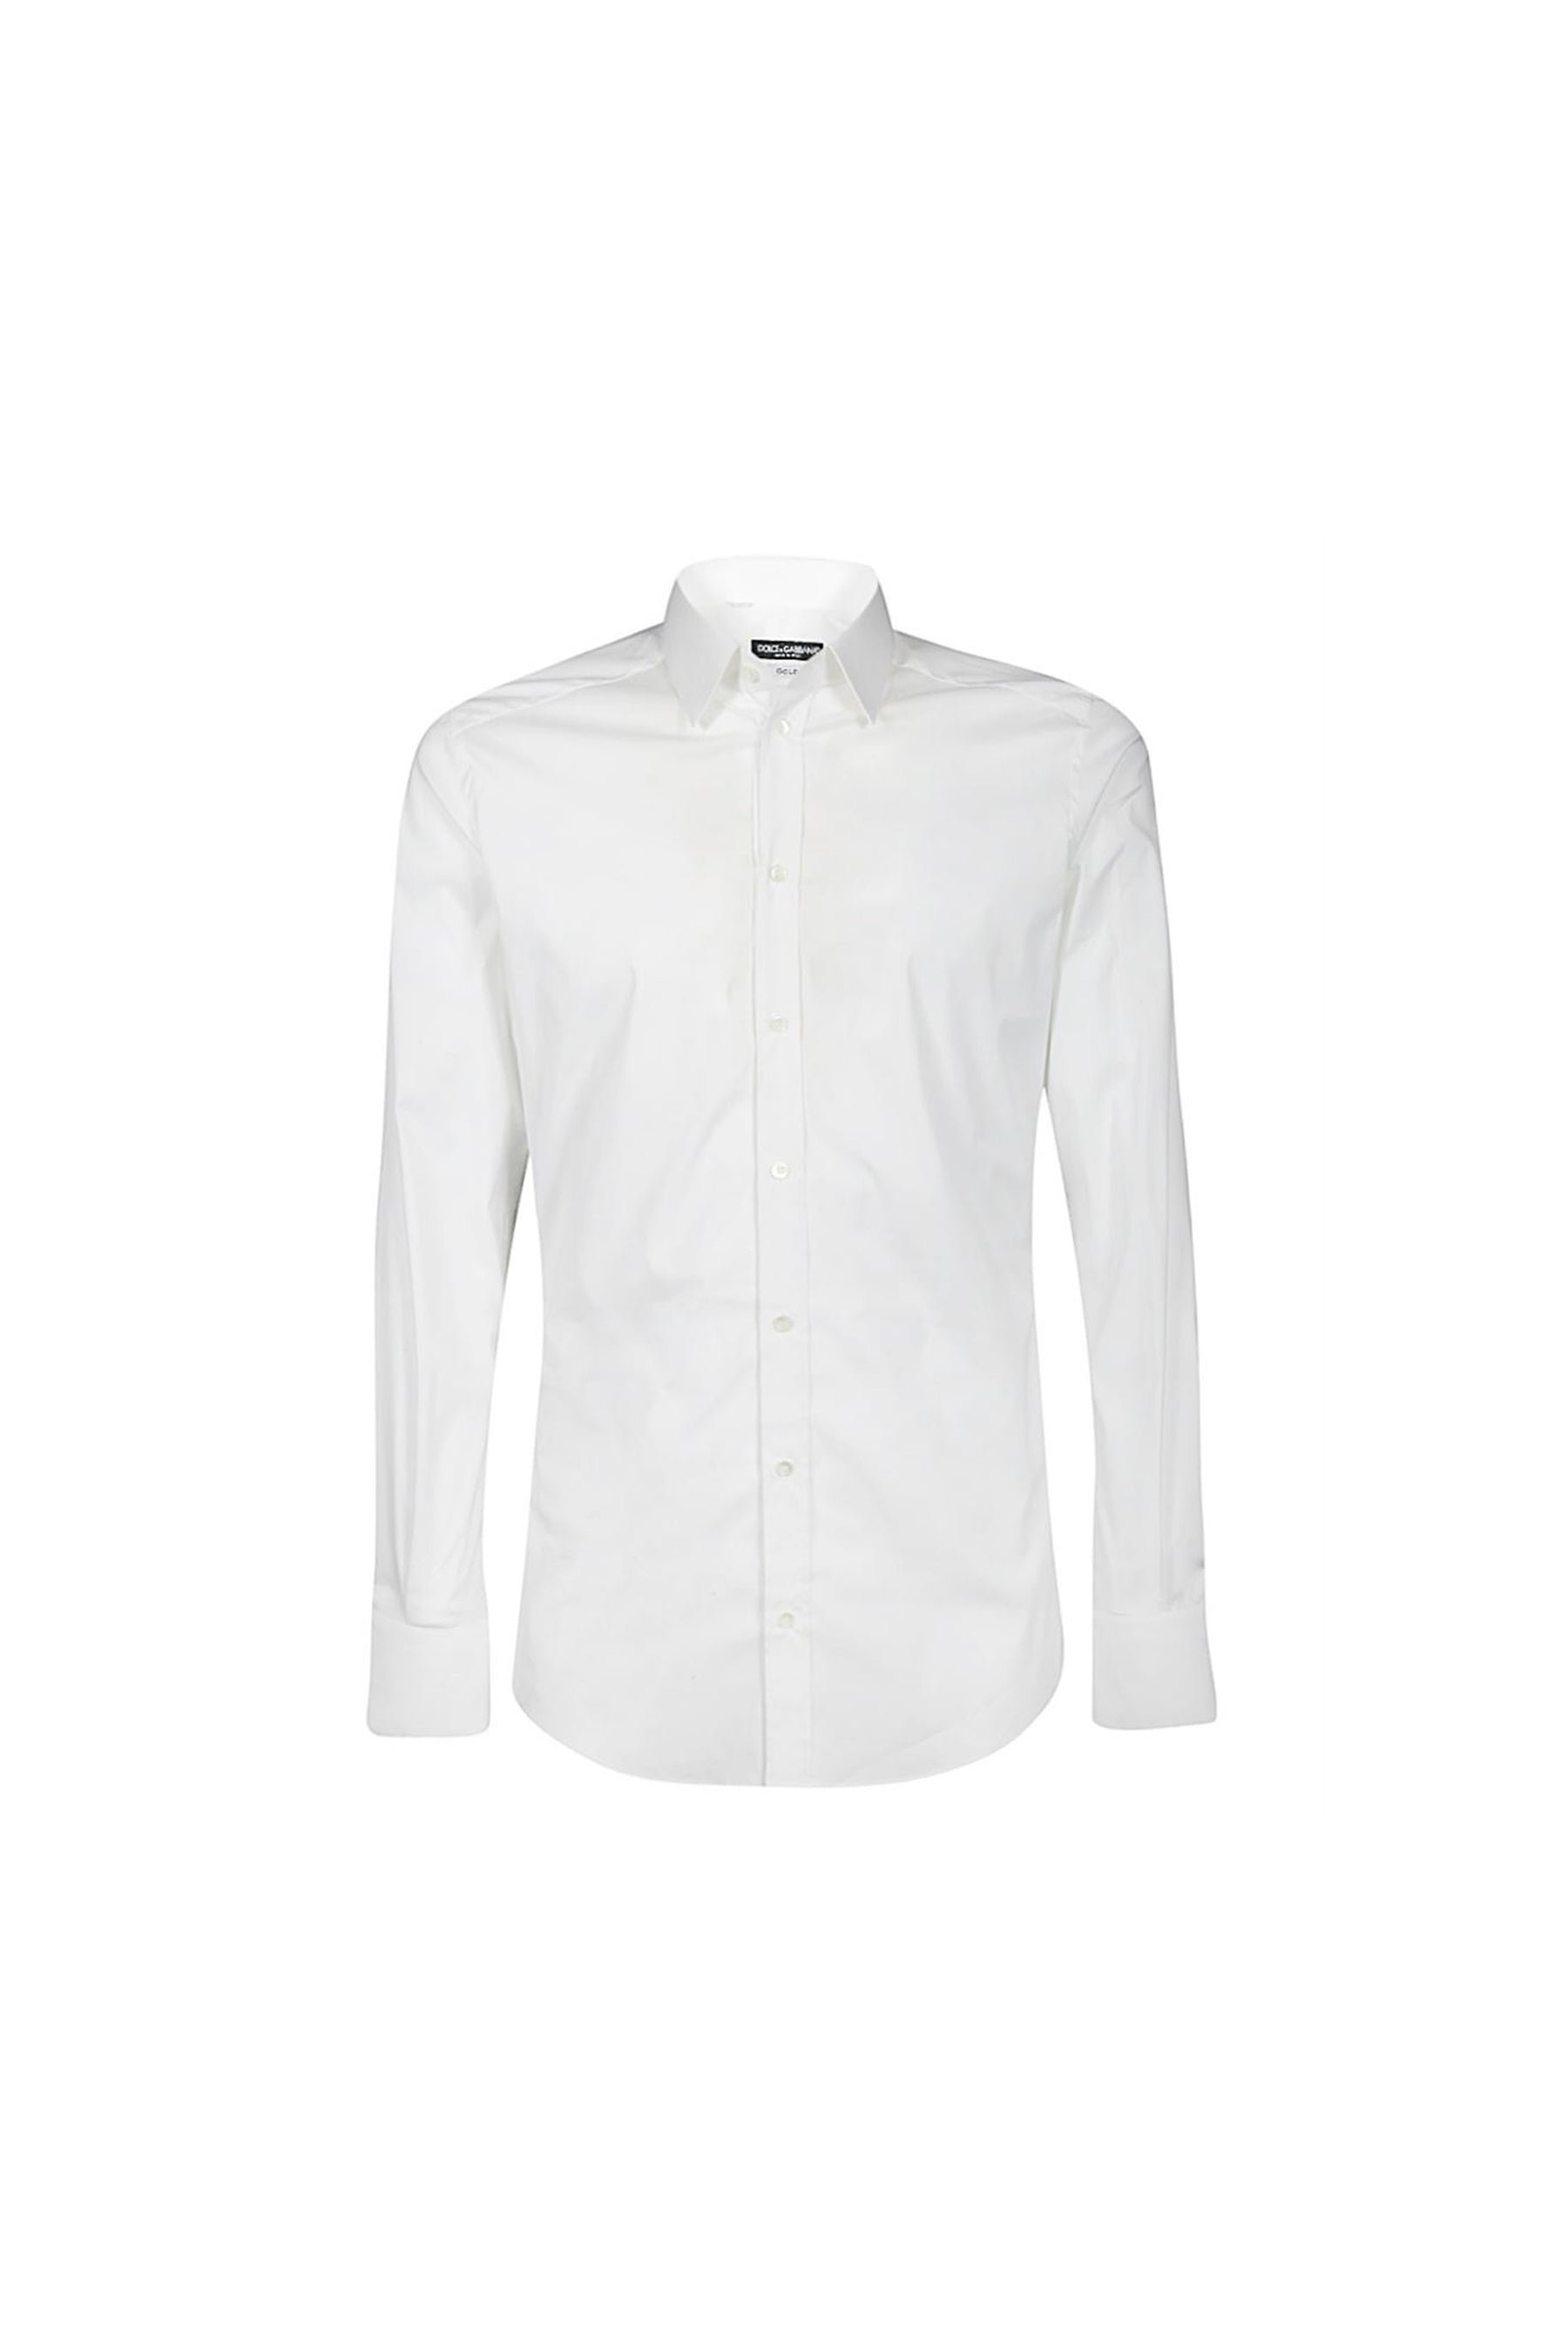 Dolce & Gabbana classic white tailored shirt